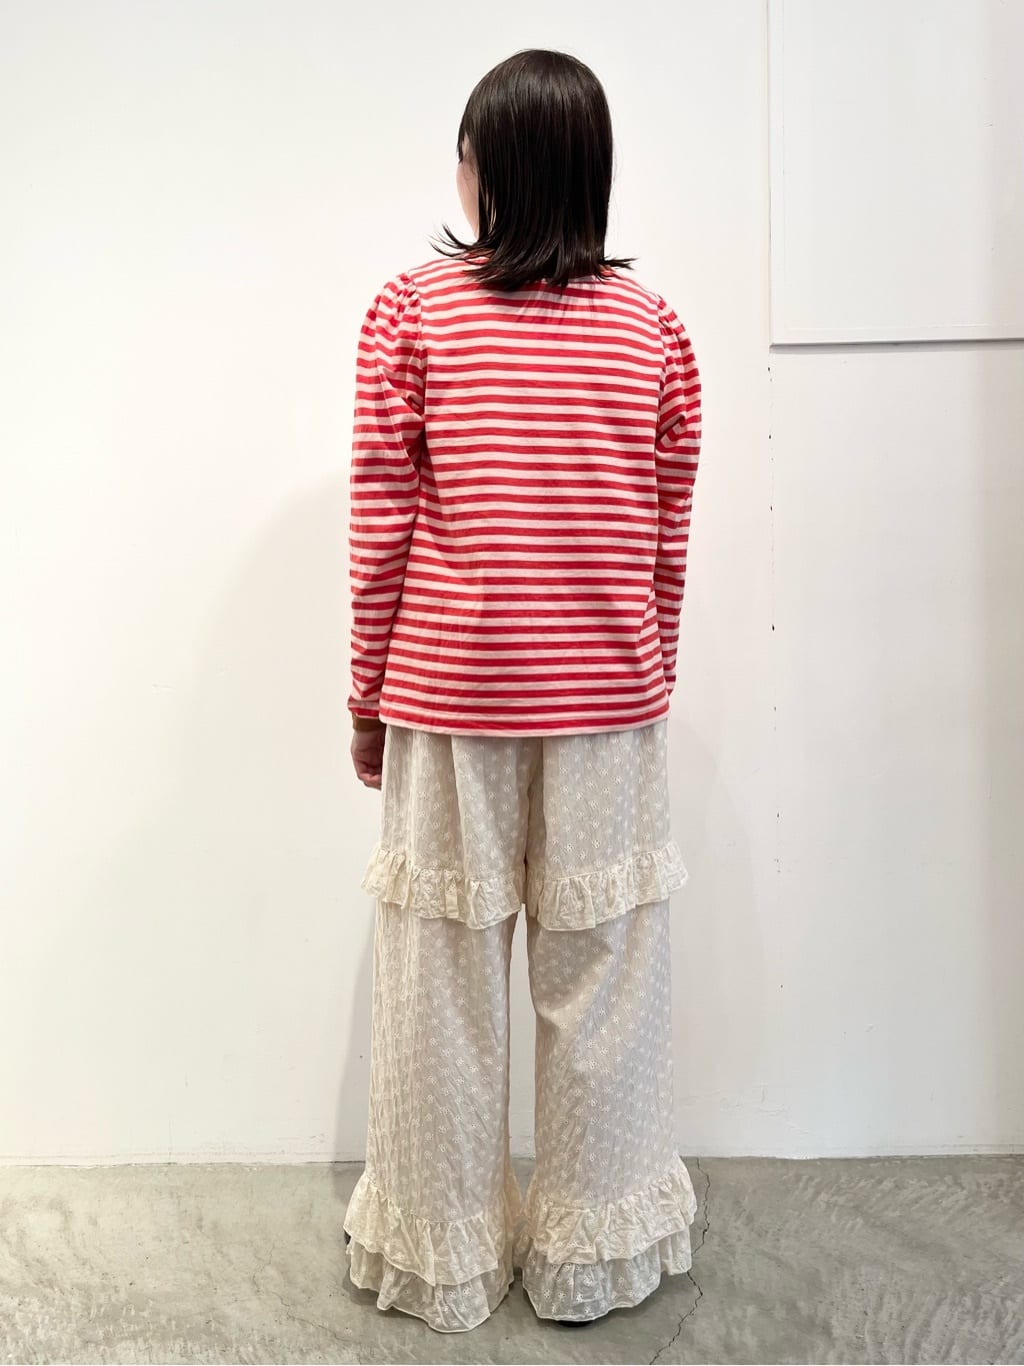 Dot and Stripes CHILD WOMAN CHILD WOMAN , PAR ICI 新宿ミロード 身長：153cm 2023.08.31